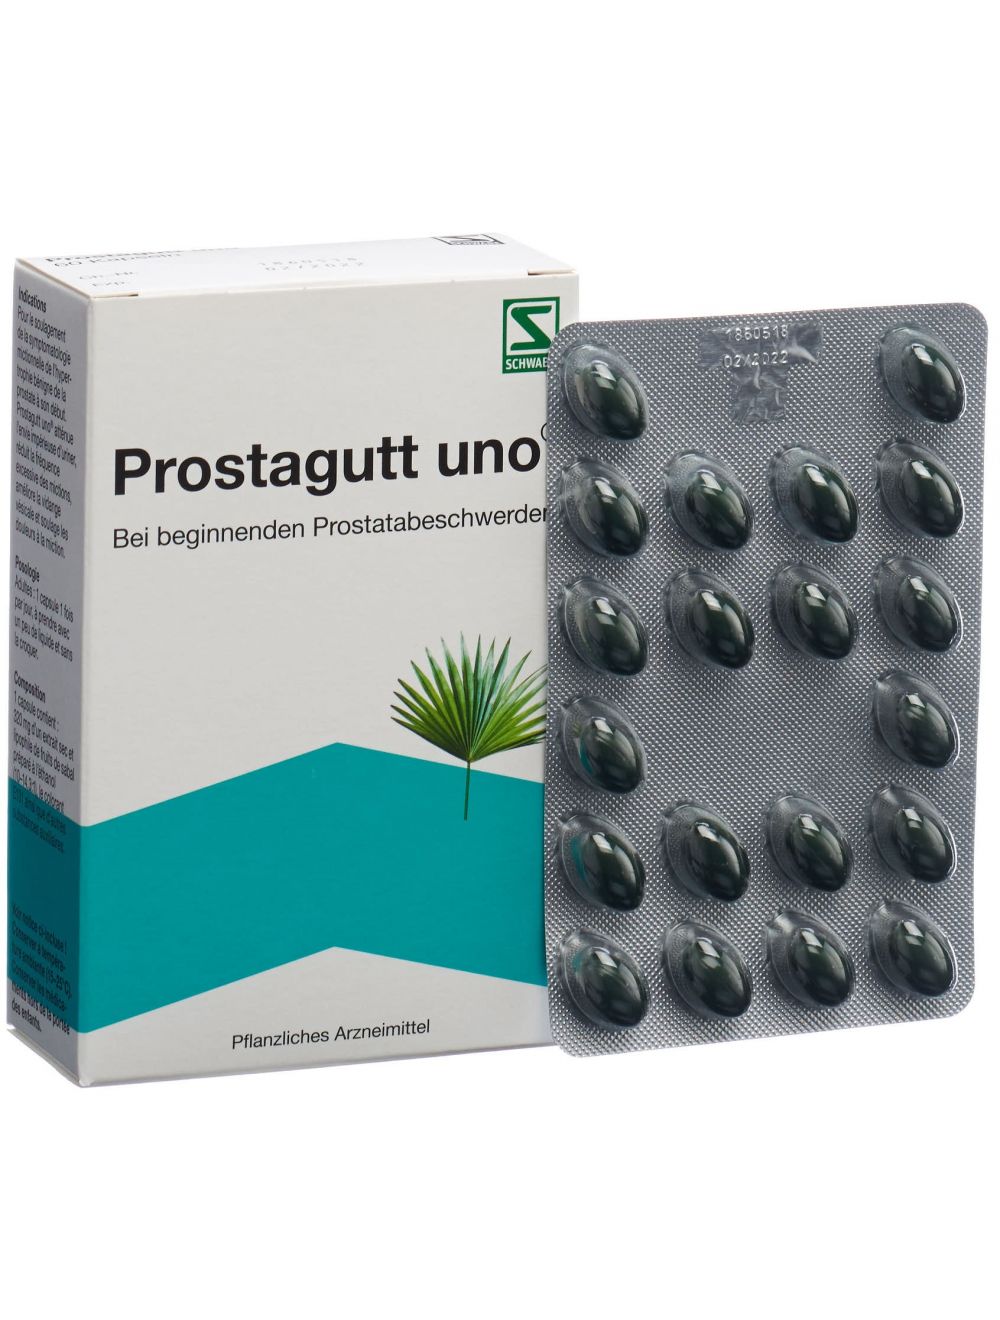 médicaments prostate sans ordonnance en pharmacie)